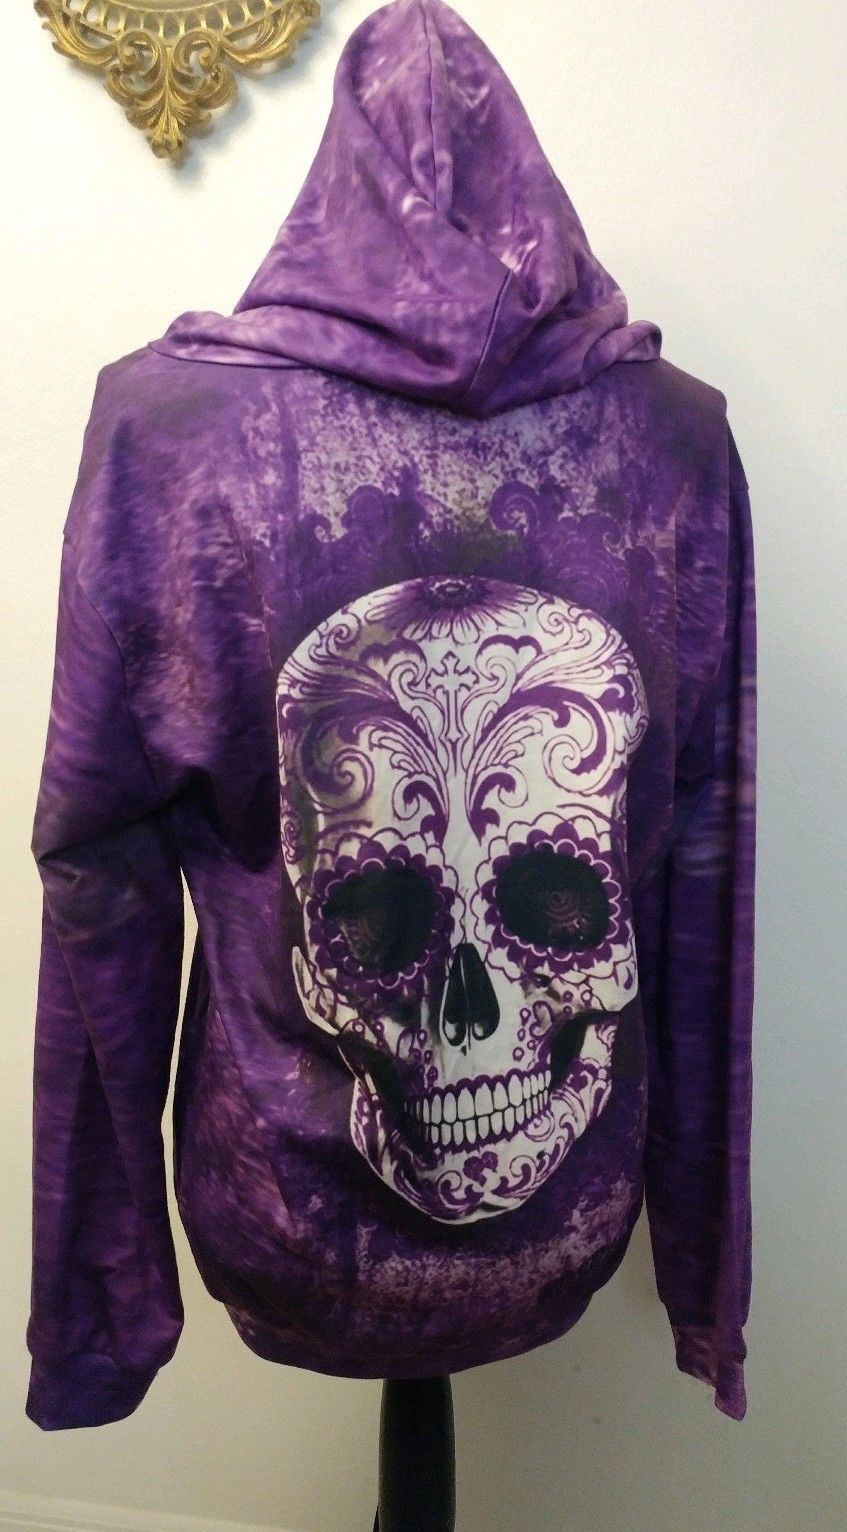 Sugar Skull Hoodies 3D Sweatshirts Printed Hoodie Brand Tracksuits Unisex Pullover 6XL Casual Fashion Jackets